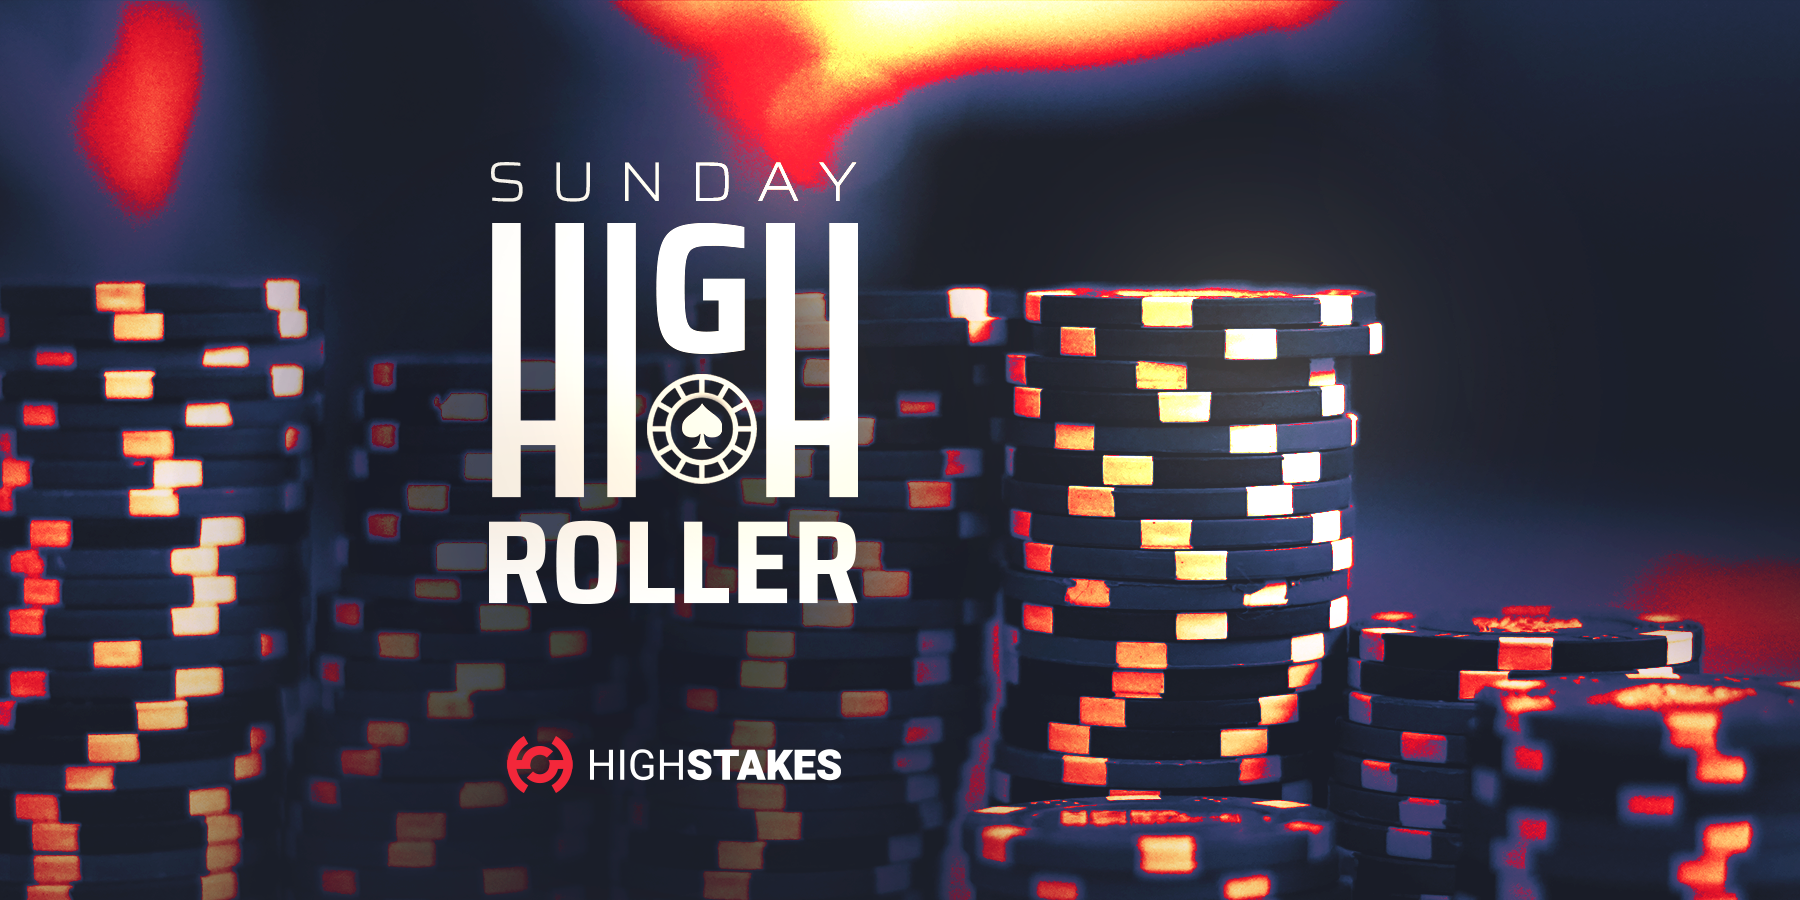 Sunday Highroller HighStakes Tournament